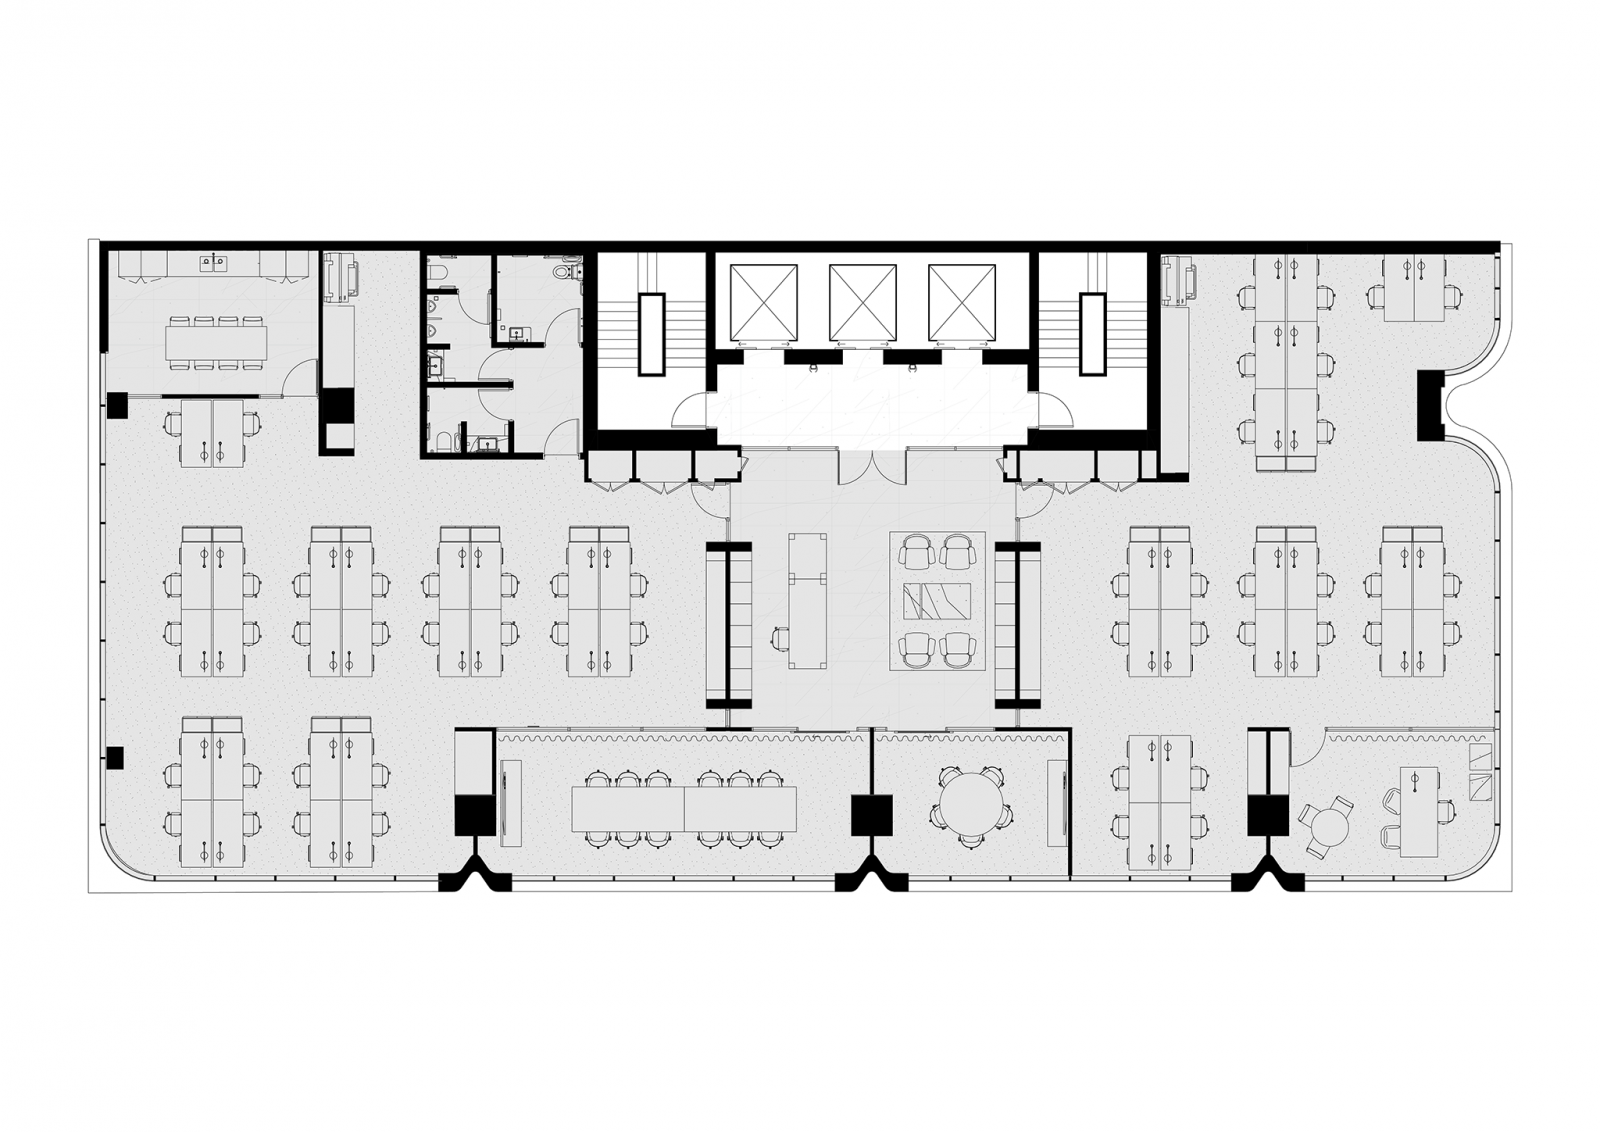 Podium floorplan, level 5, single tenancy, 1:10 population ratio